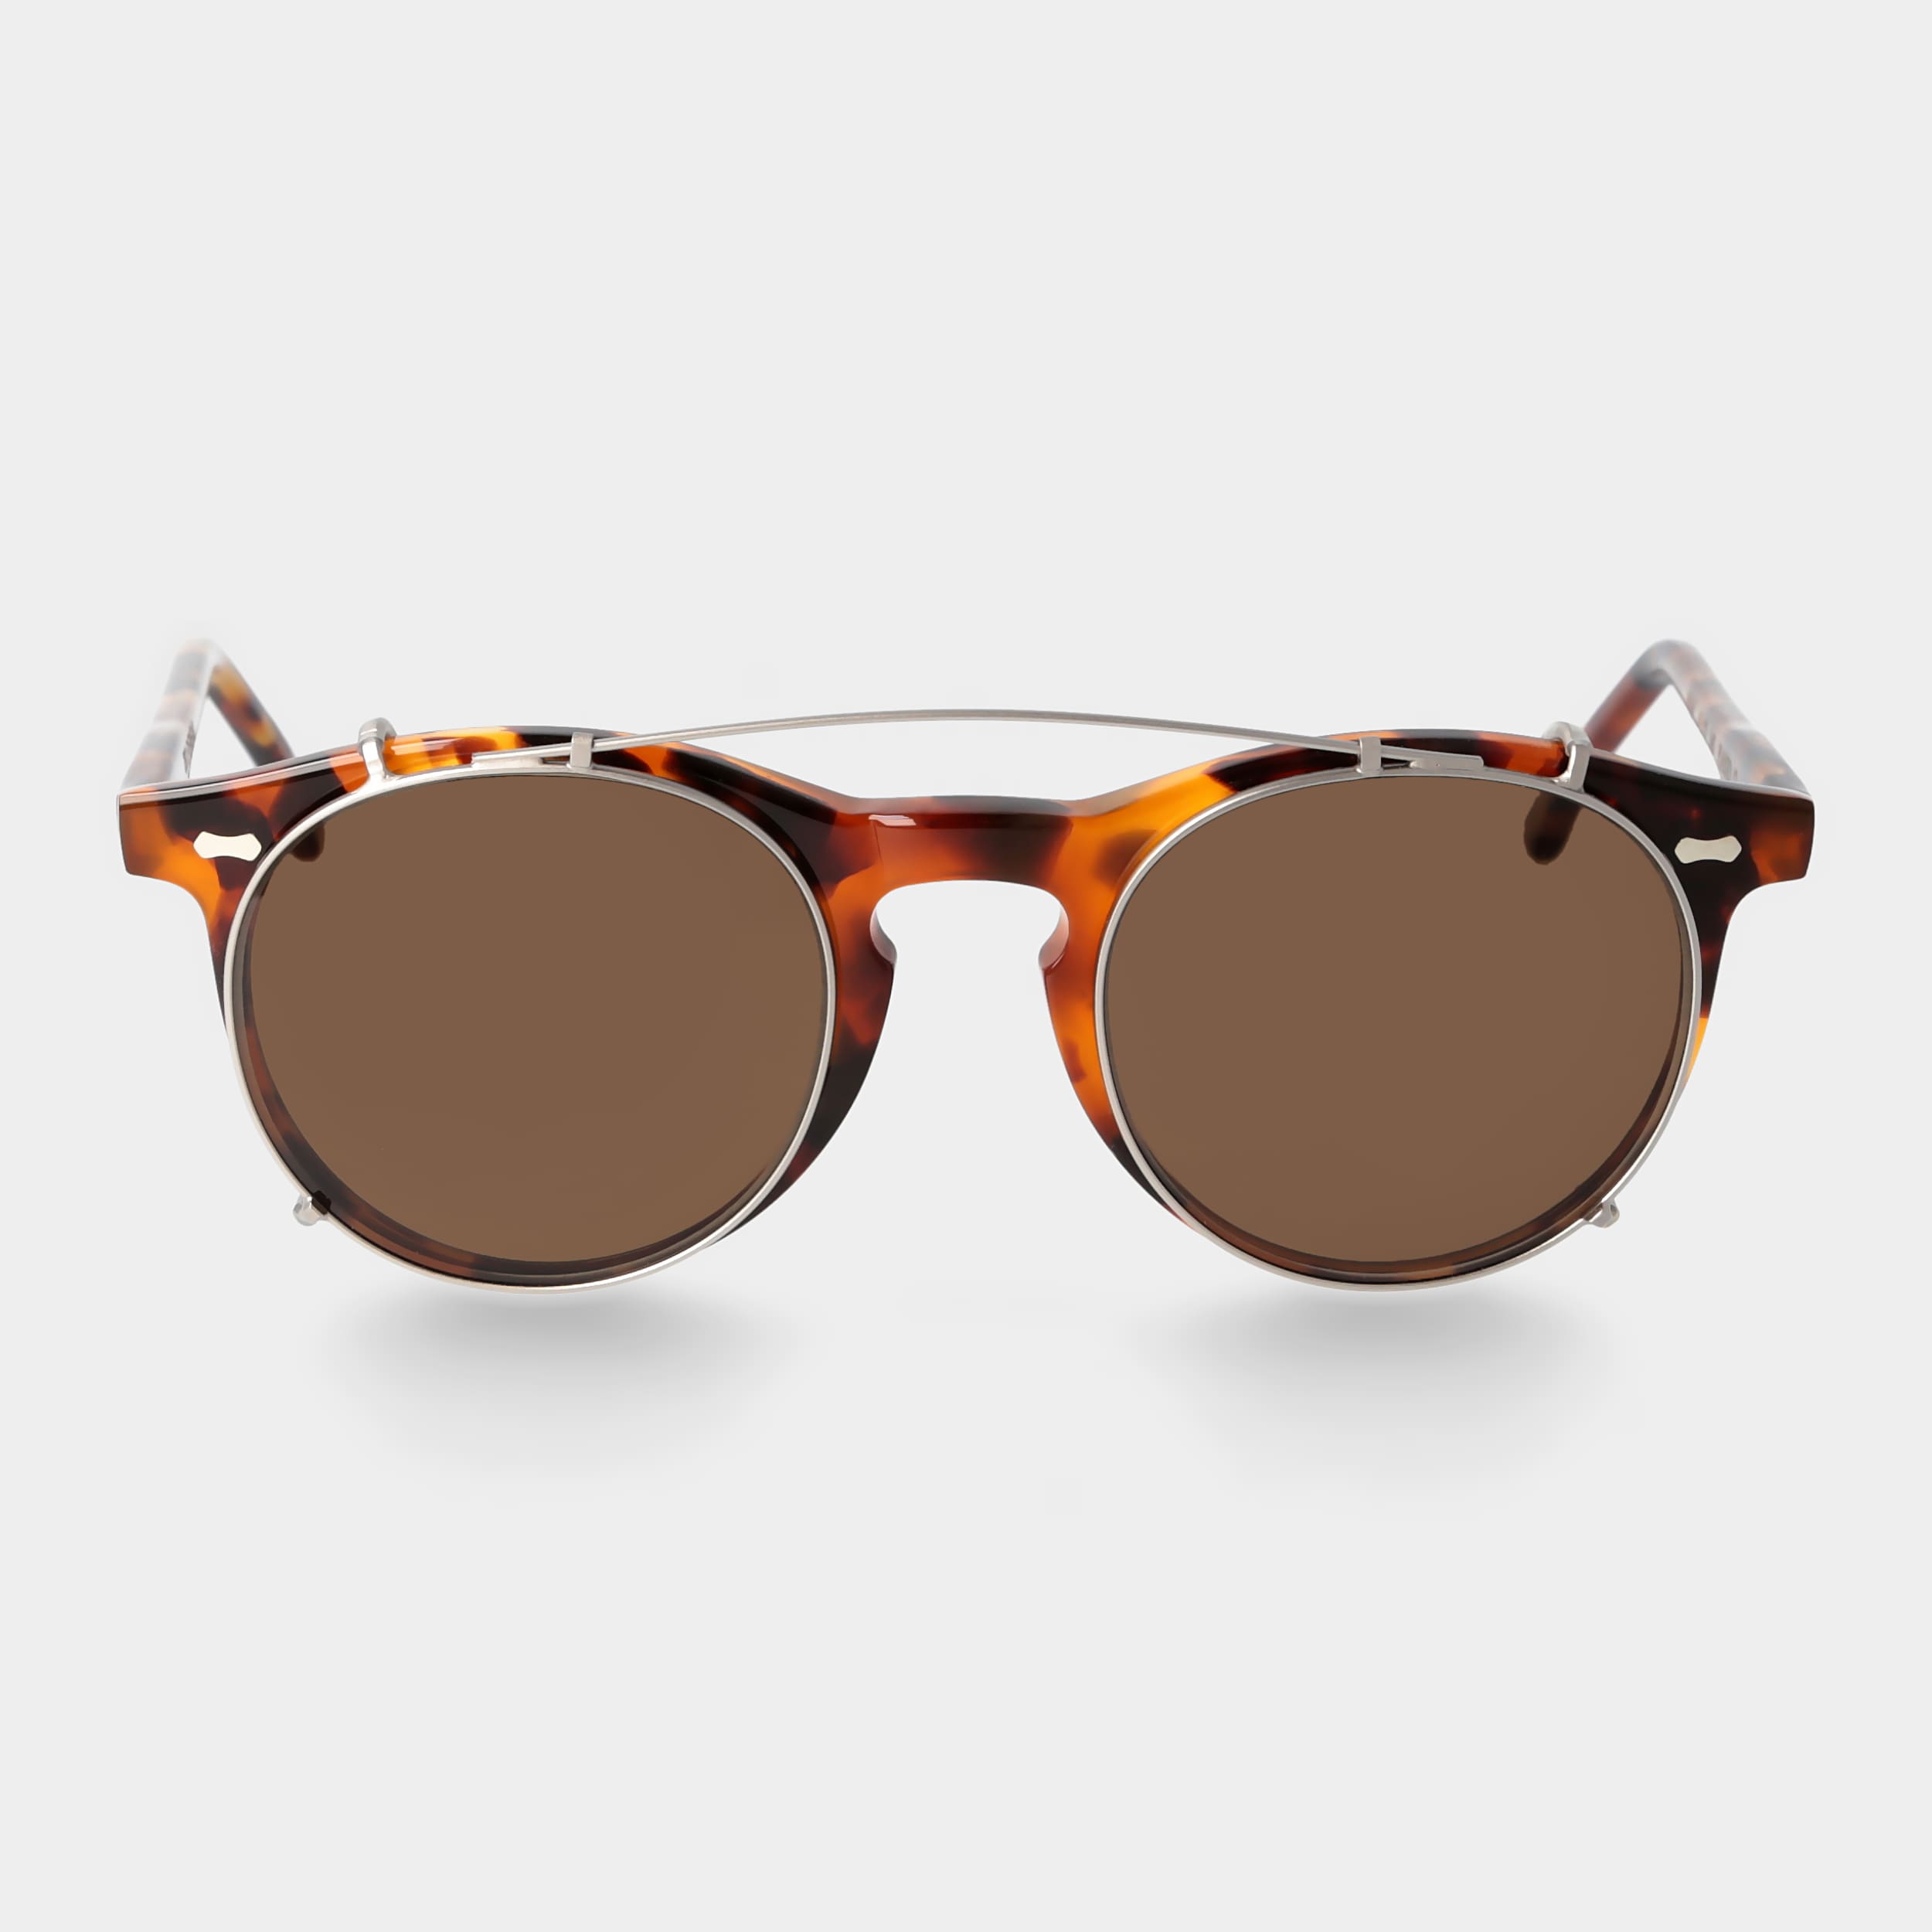 sunglasses-pleat-amber-tortoise-silver-tobacco-tbd-eyewear-front